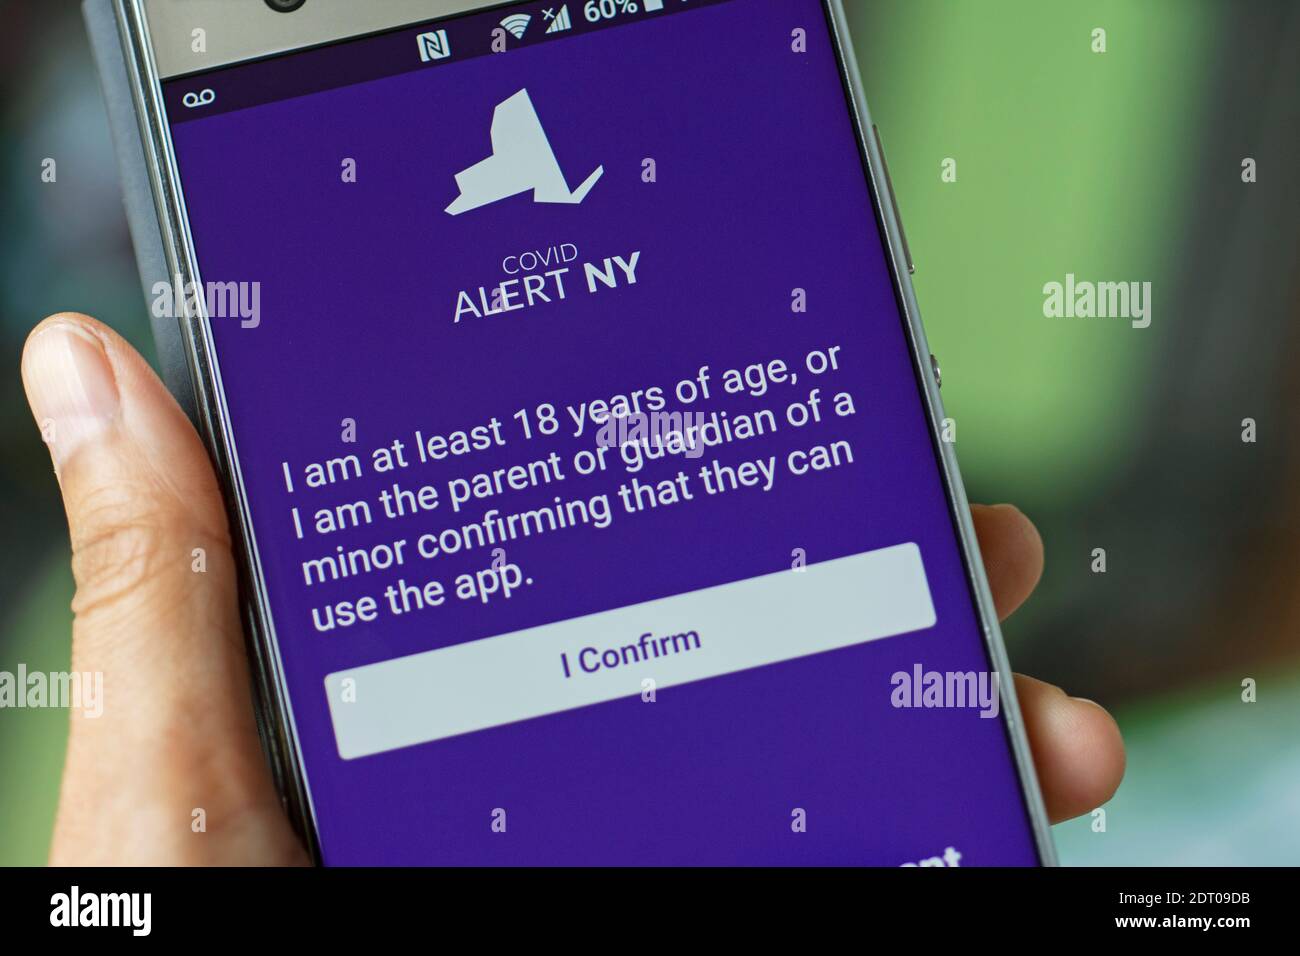 COVID Alert NY App on Mobile Phone, Smartphone screen Stock Photo